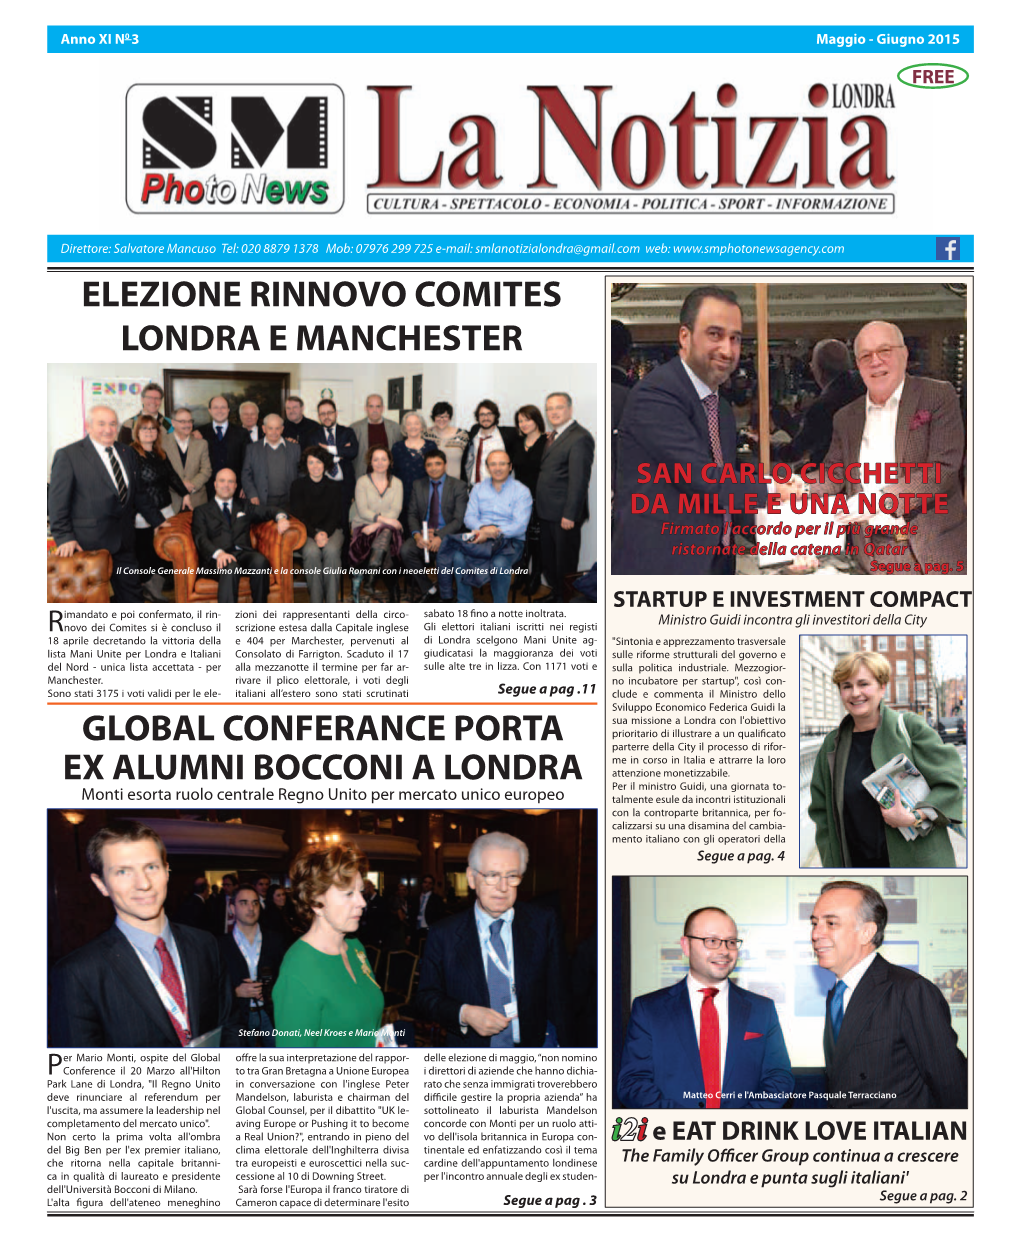 SM La Notizia XI 3.Indd